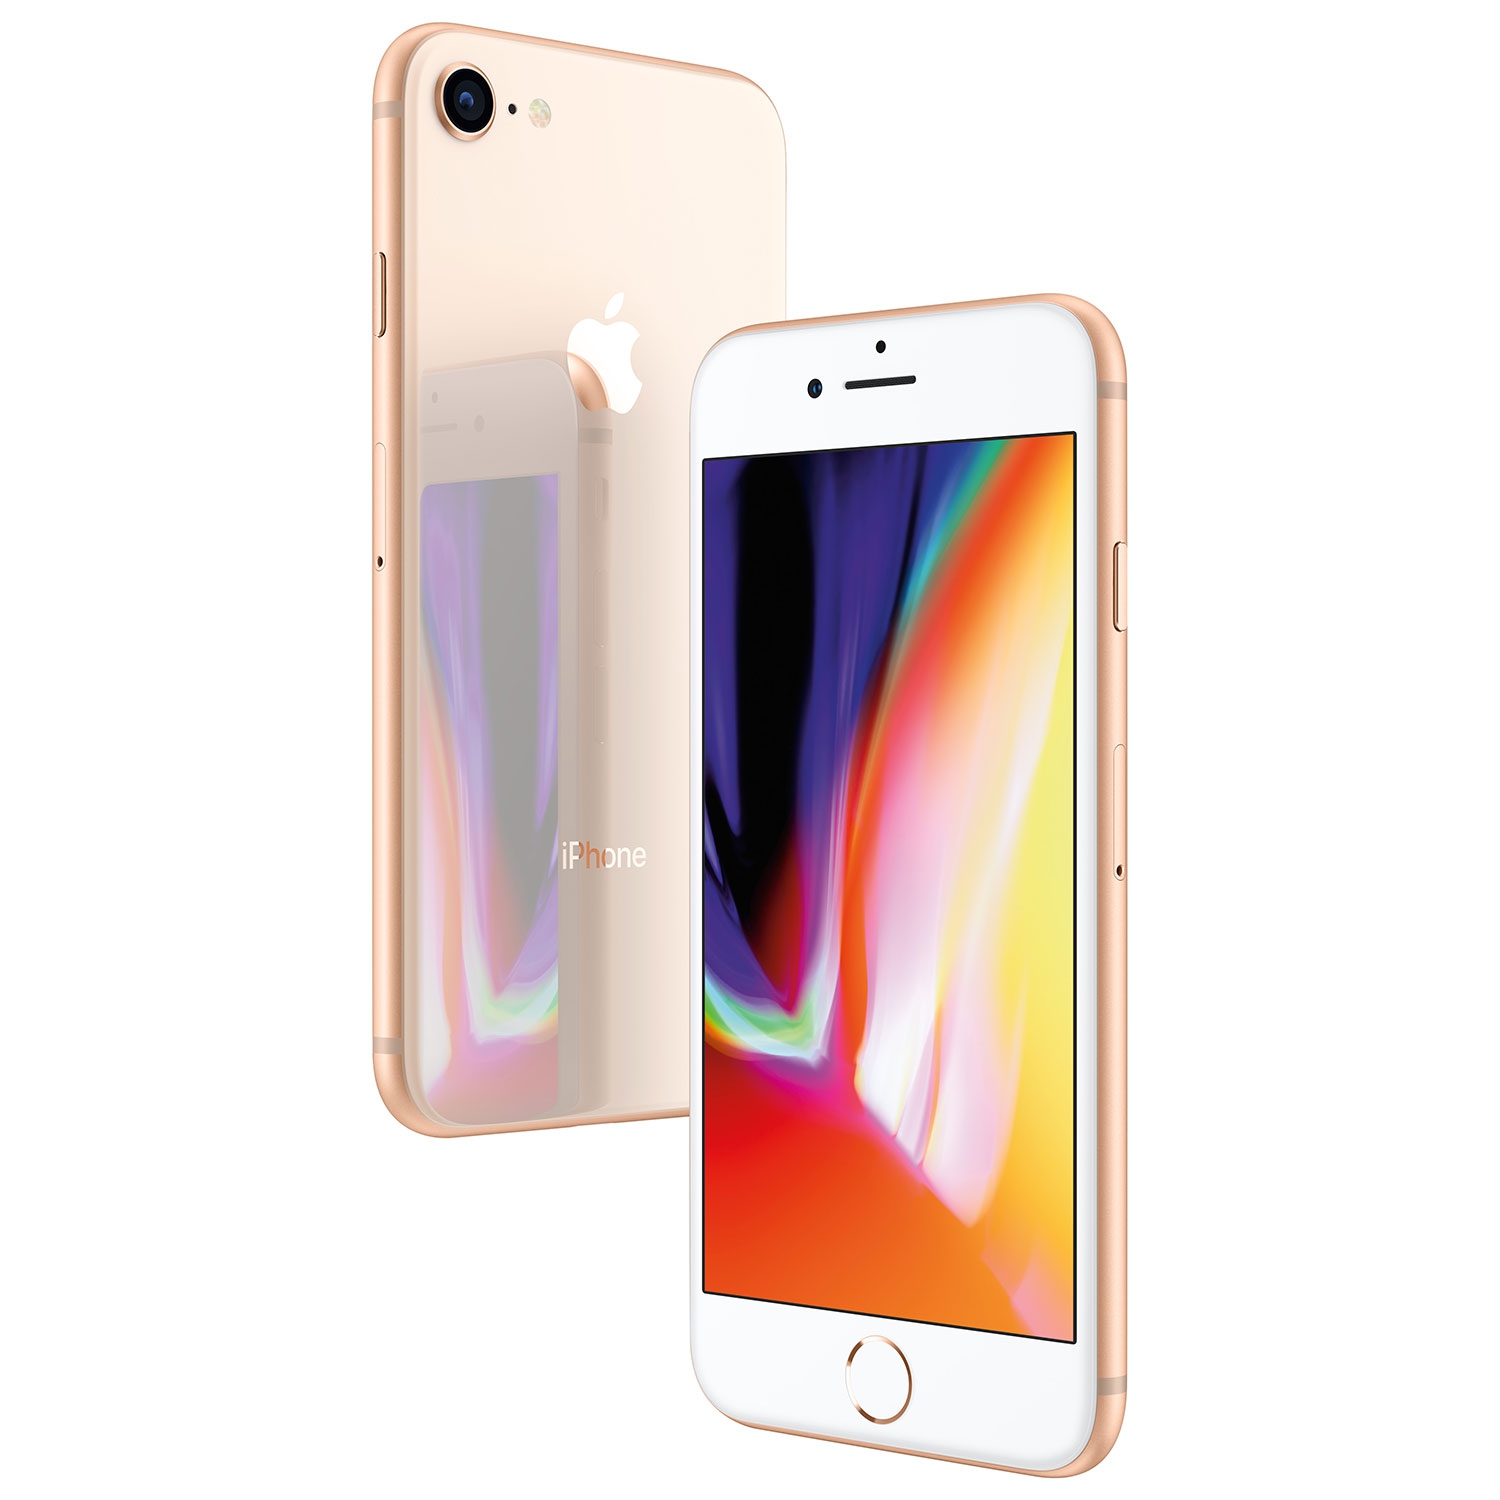 Refurbished (Excellent) - Apple iPhone 8 64GB Smartphone - Gold - Unlocked - Certified Refurbished